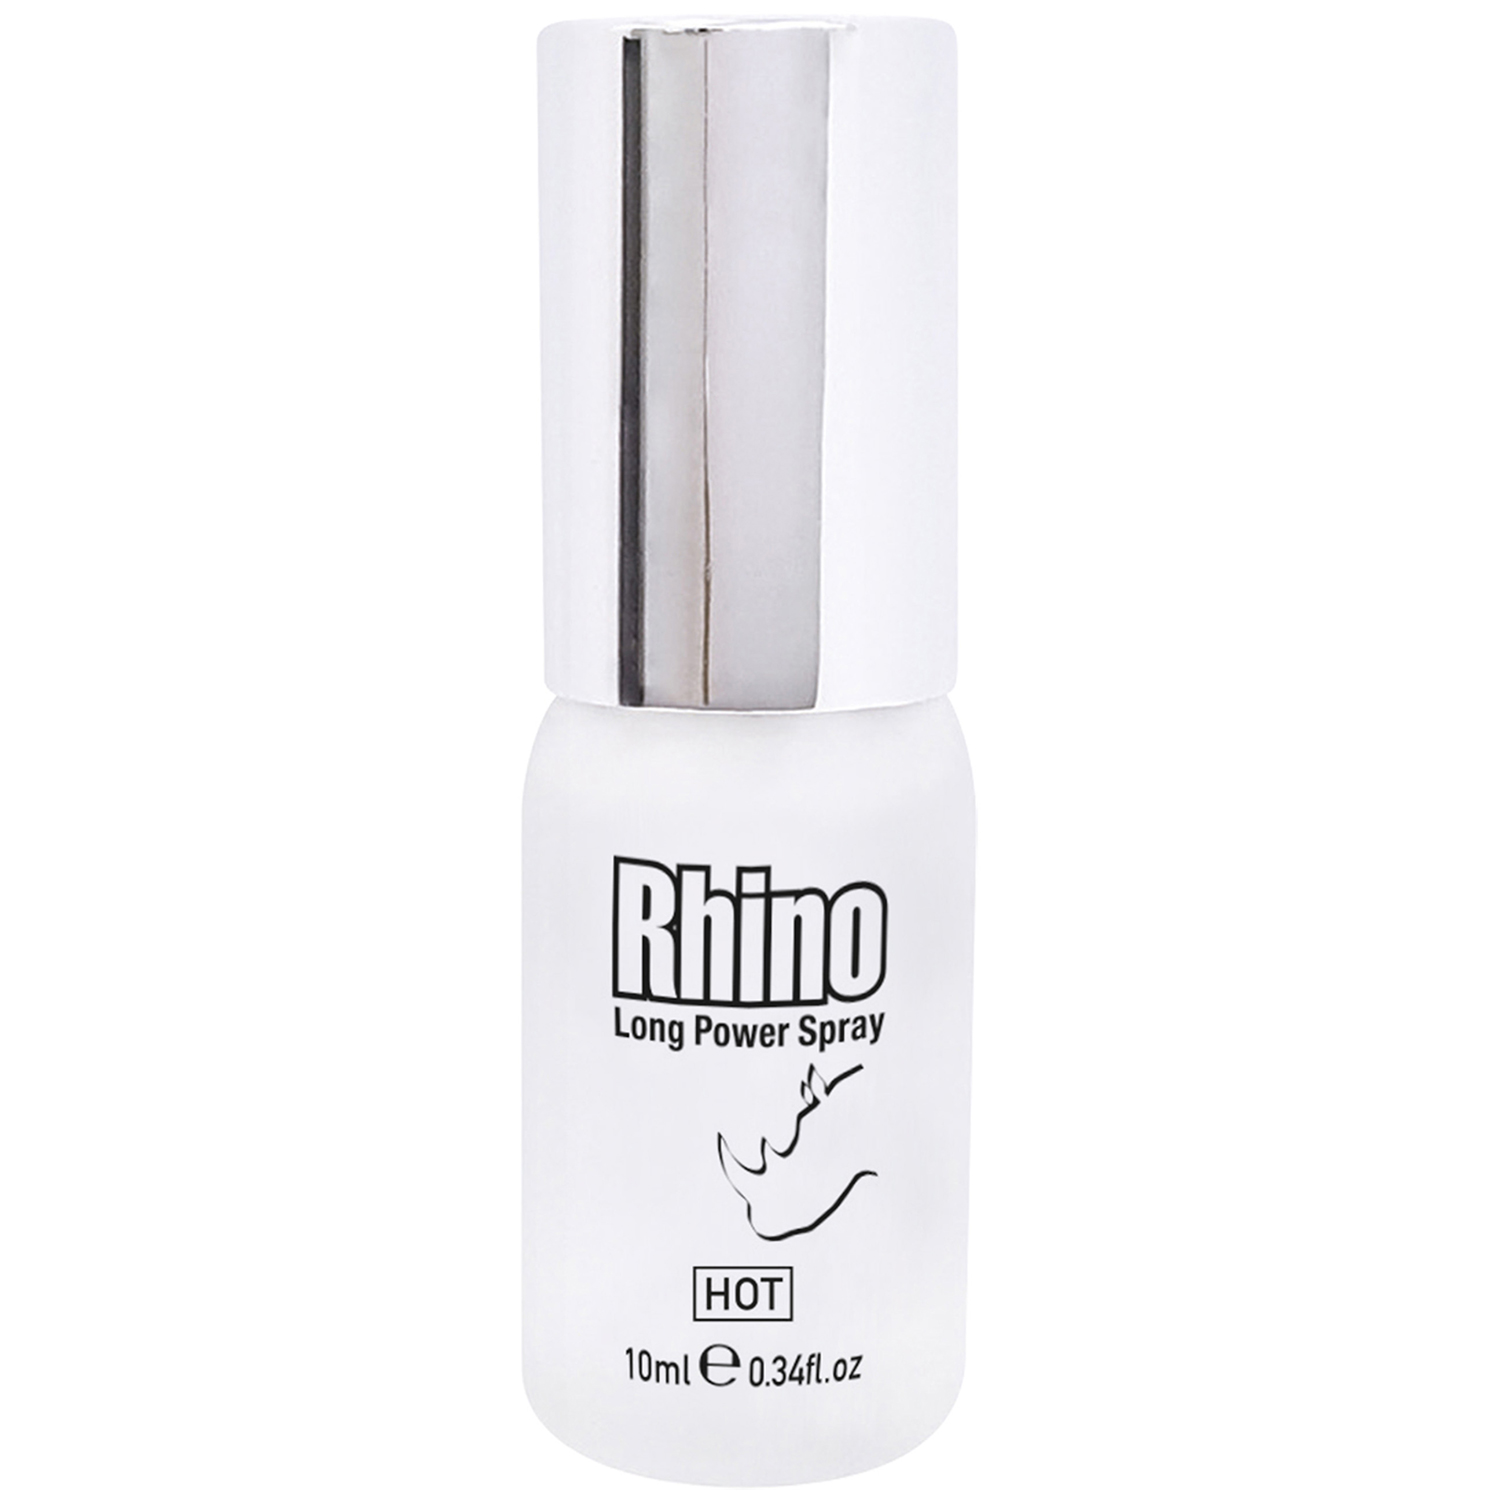 Hot Rhino Spray Long Power Spray 10 ml   - Klar